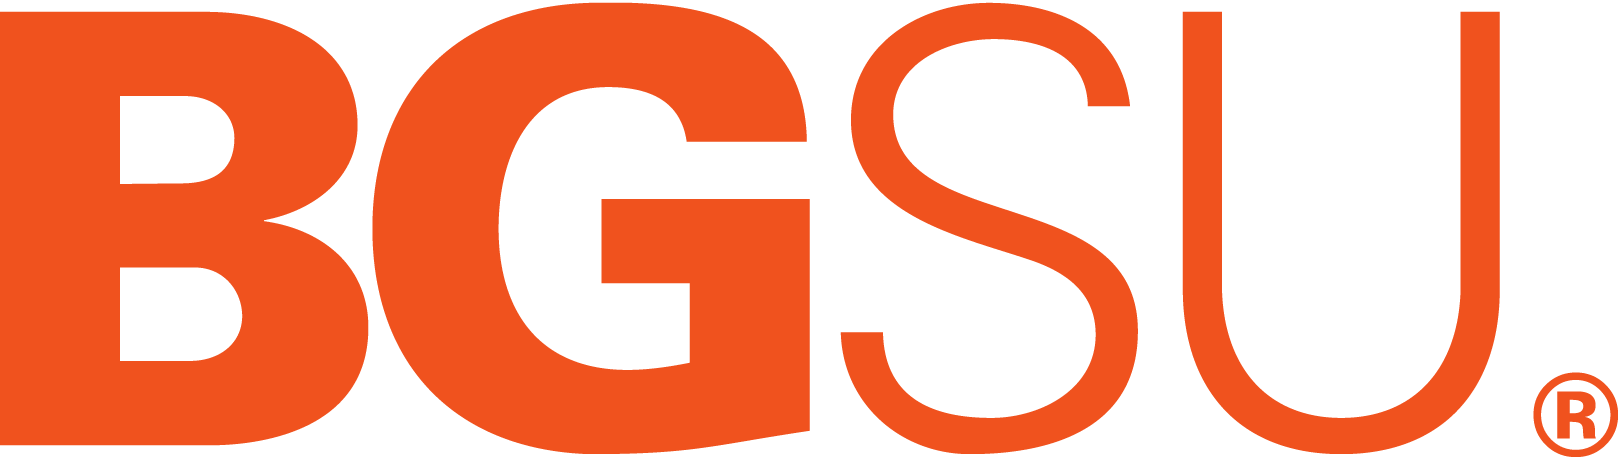 BGSU_Logo.png